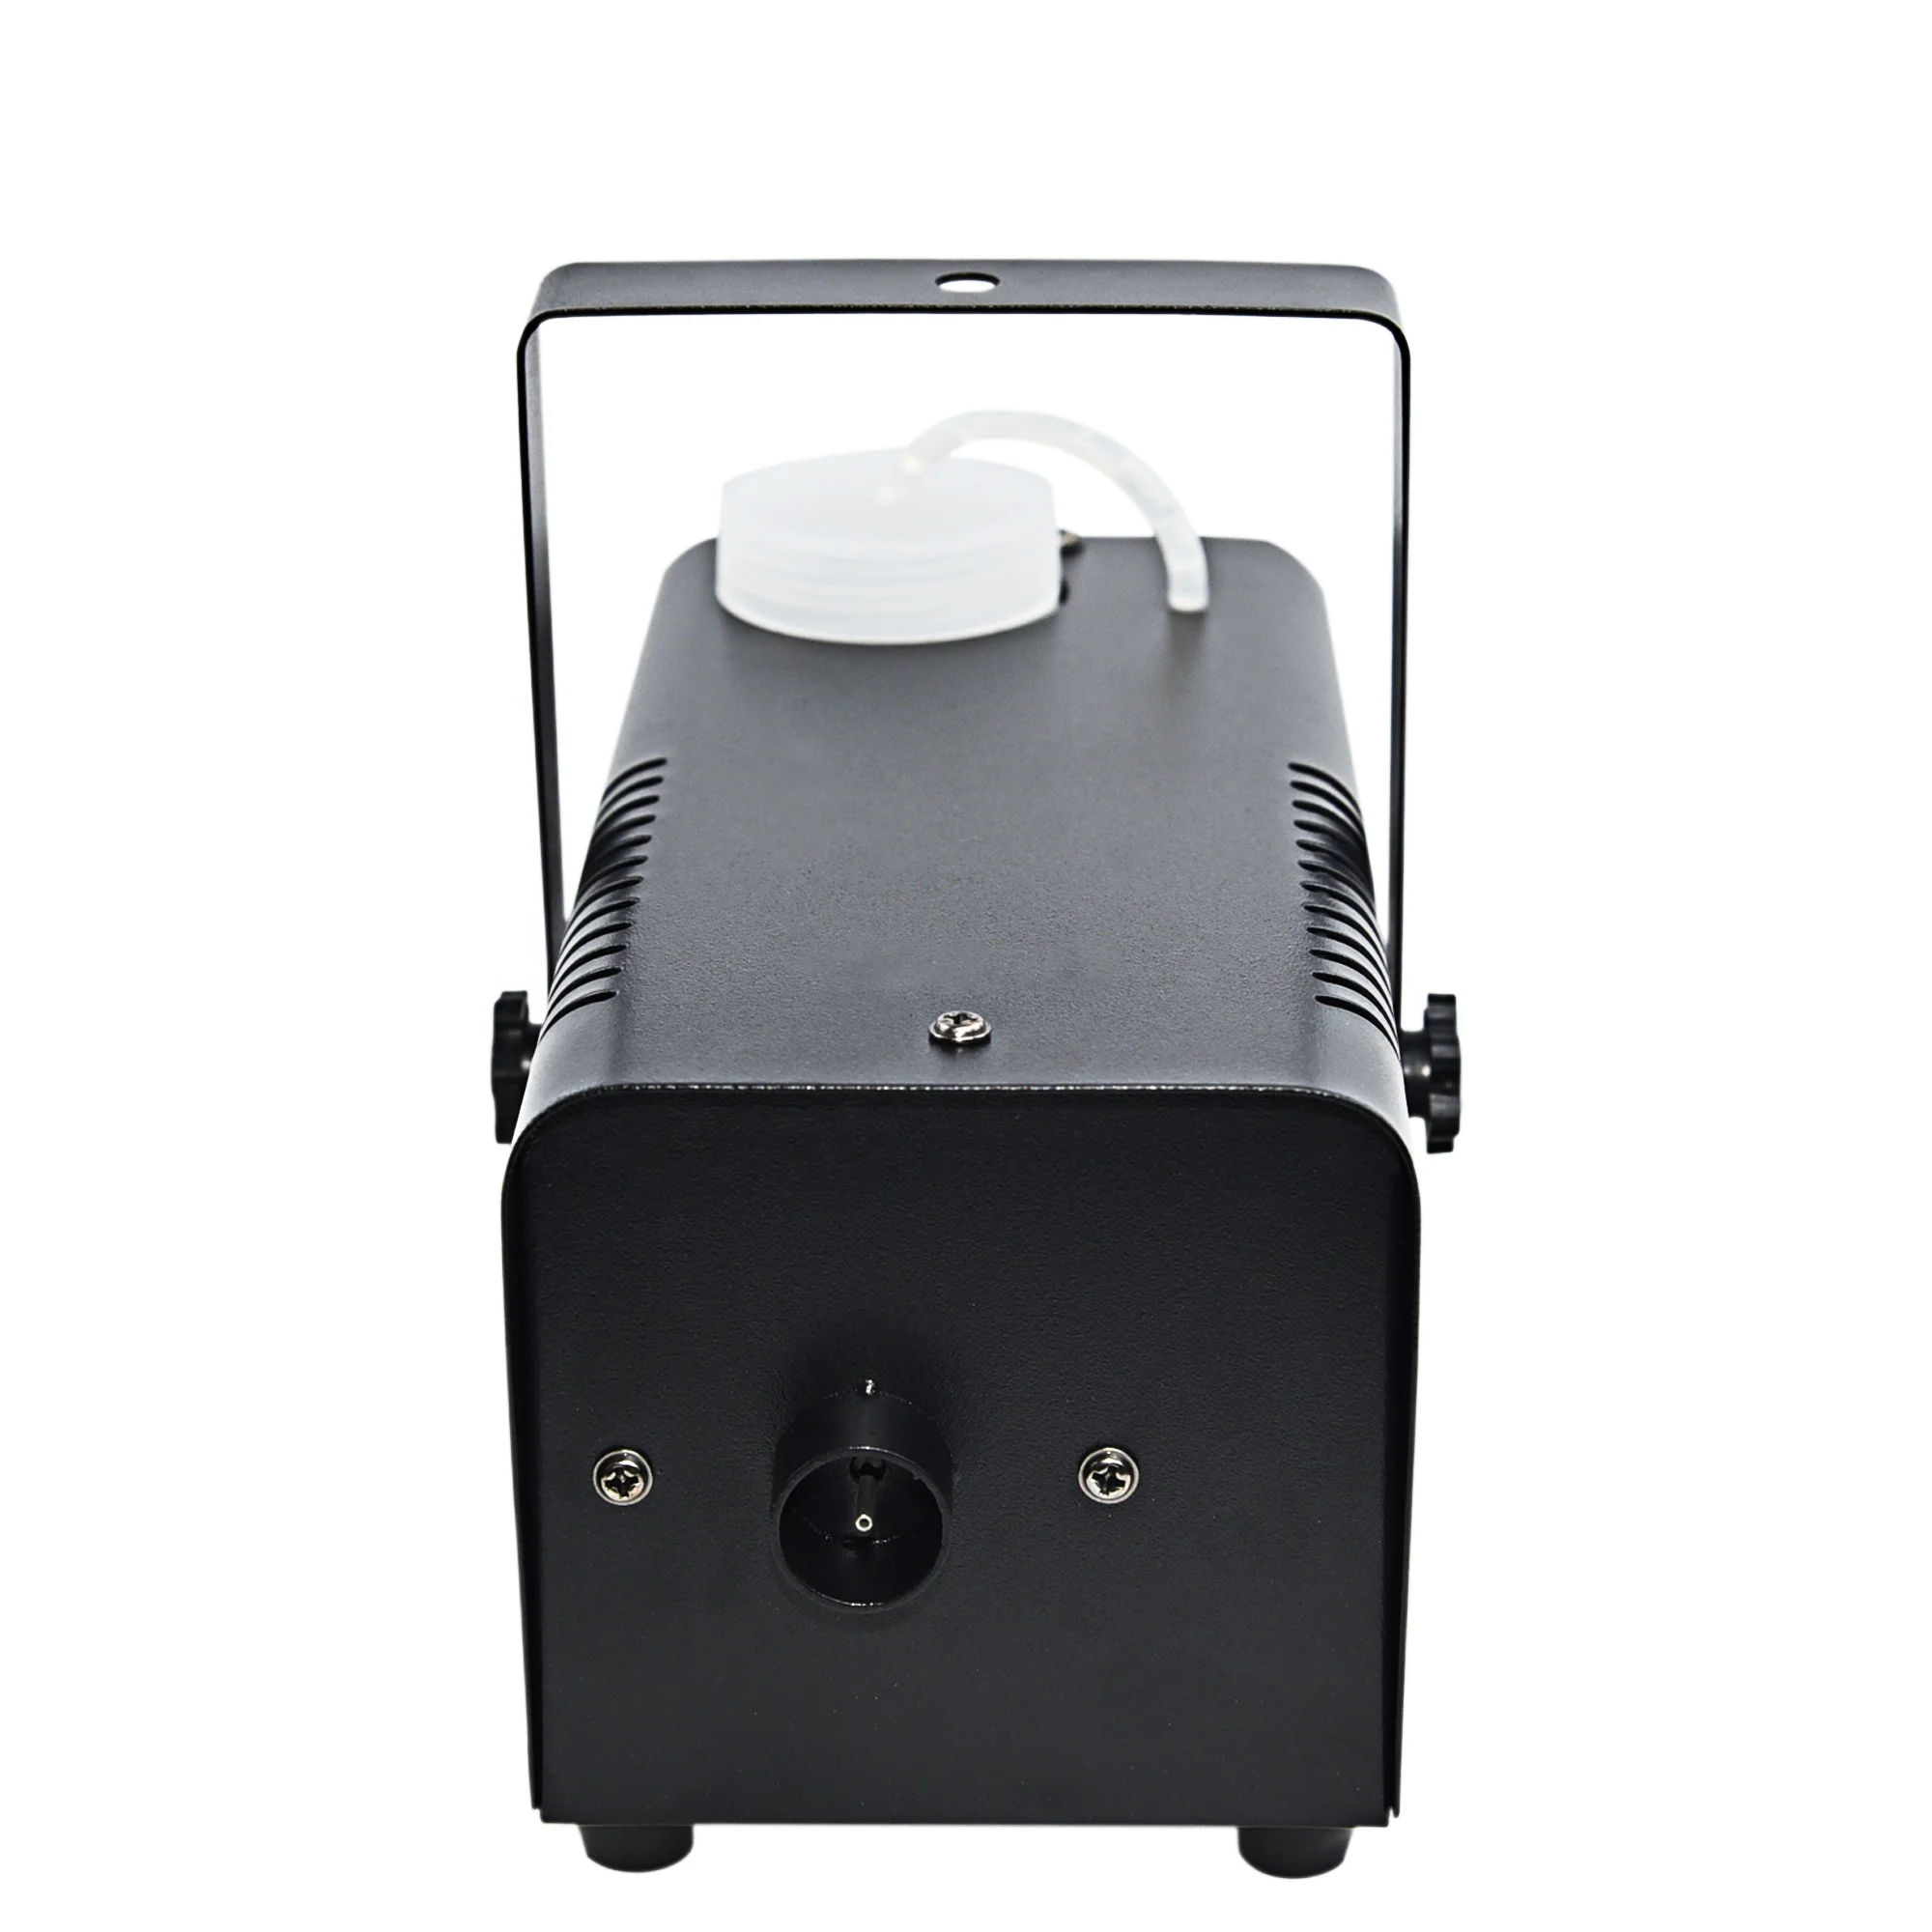 

SITERUI SFX Hot sale portable smoke machine mini 400W ordinary fog machine for home party and small birthday room